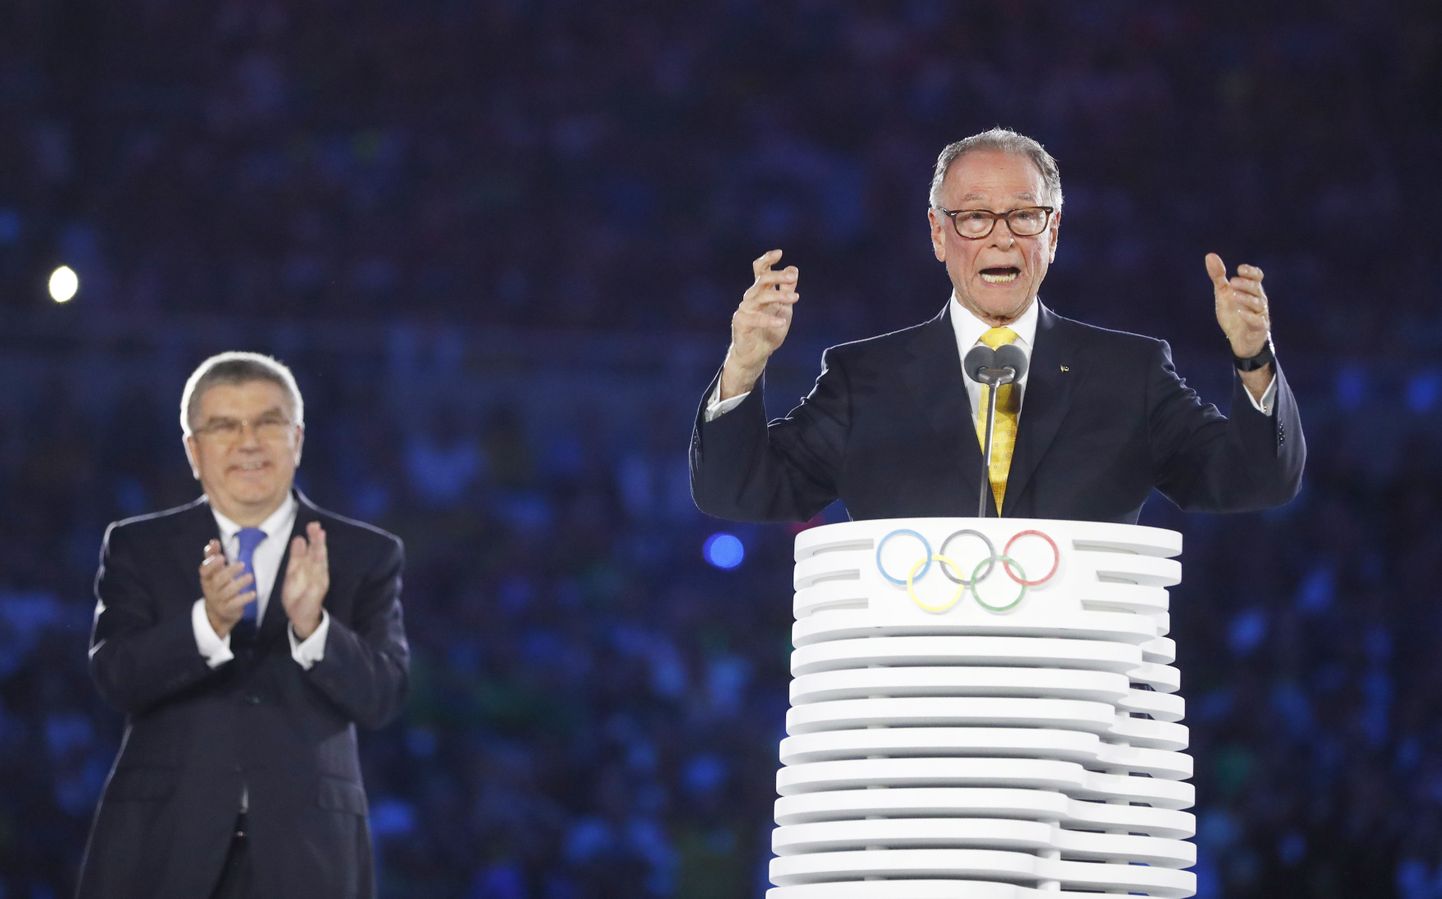 ROKi president Thomas Bach aplodeerimas Brasiilia olümpiakomitee juhile Carlos Nuzmanile.